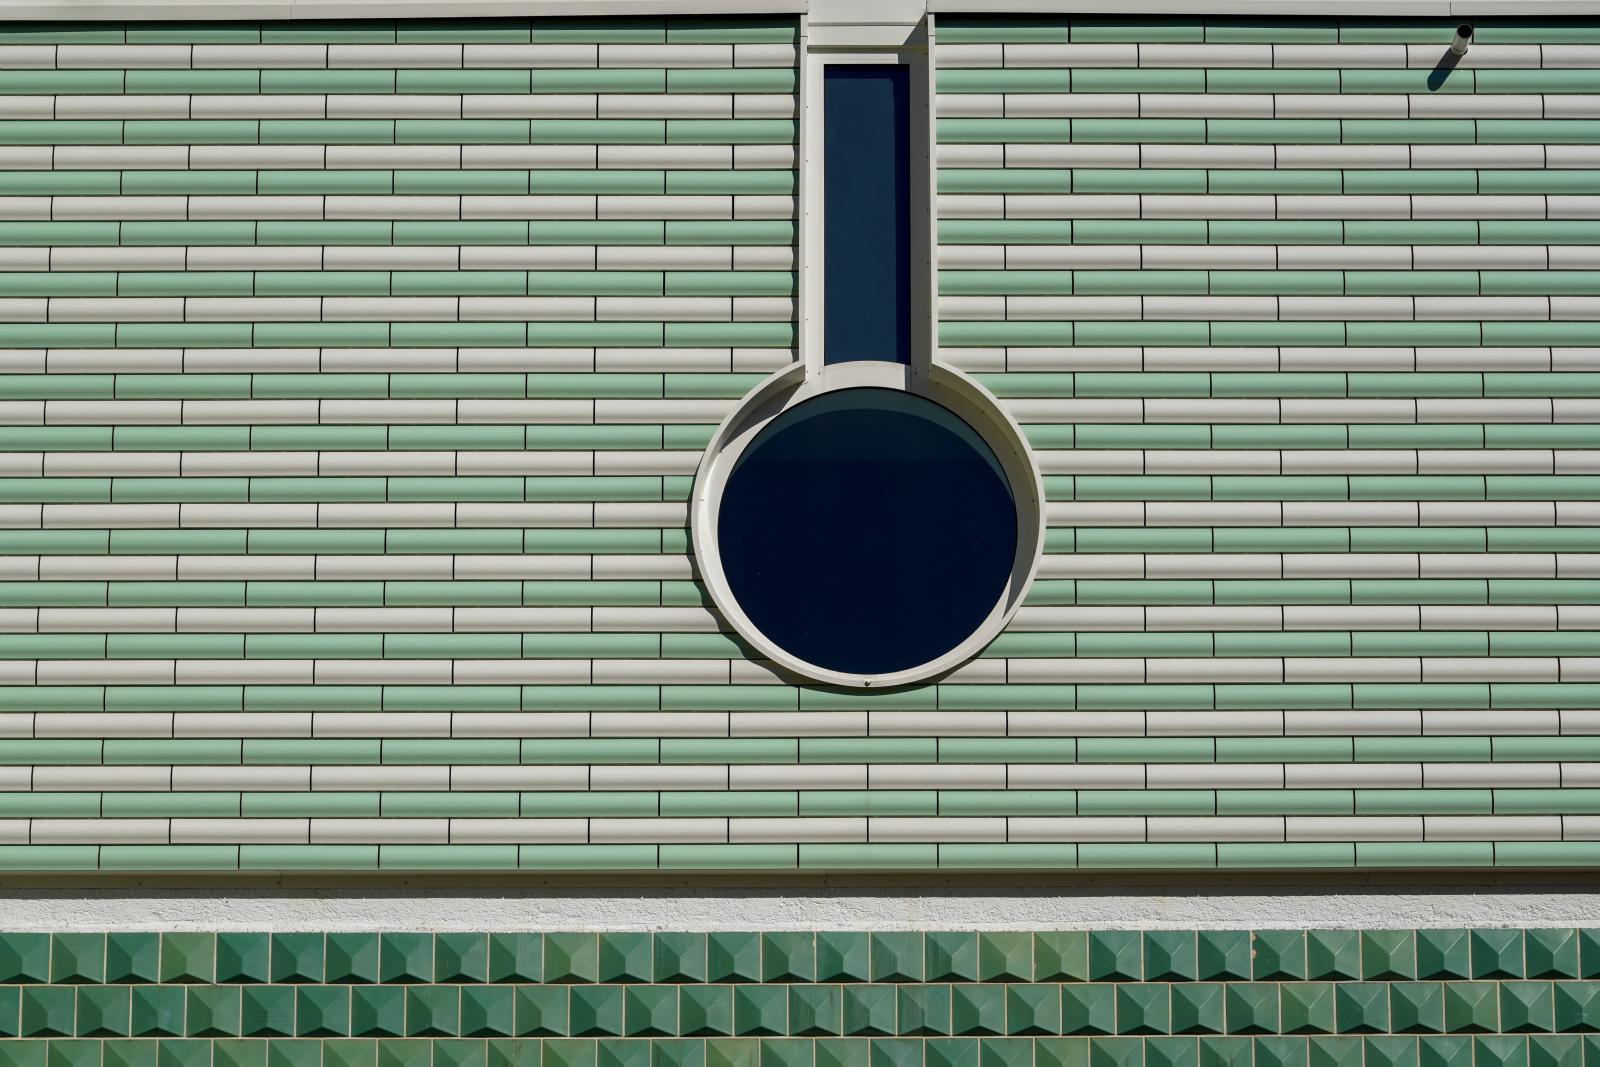 Geometry in Harmony: Circular Window on Tiled Facade